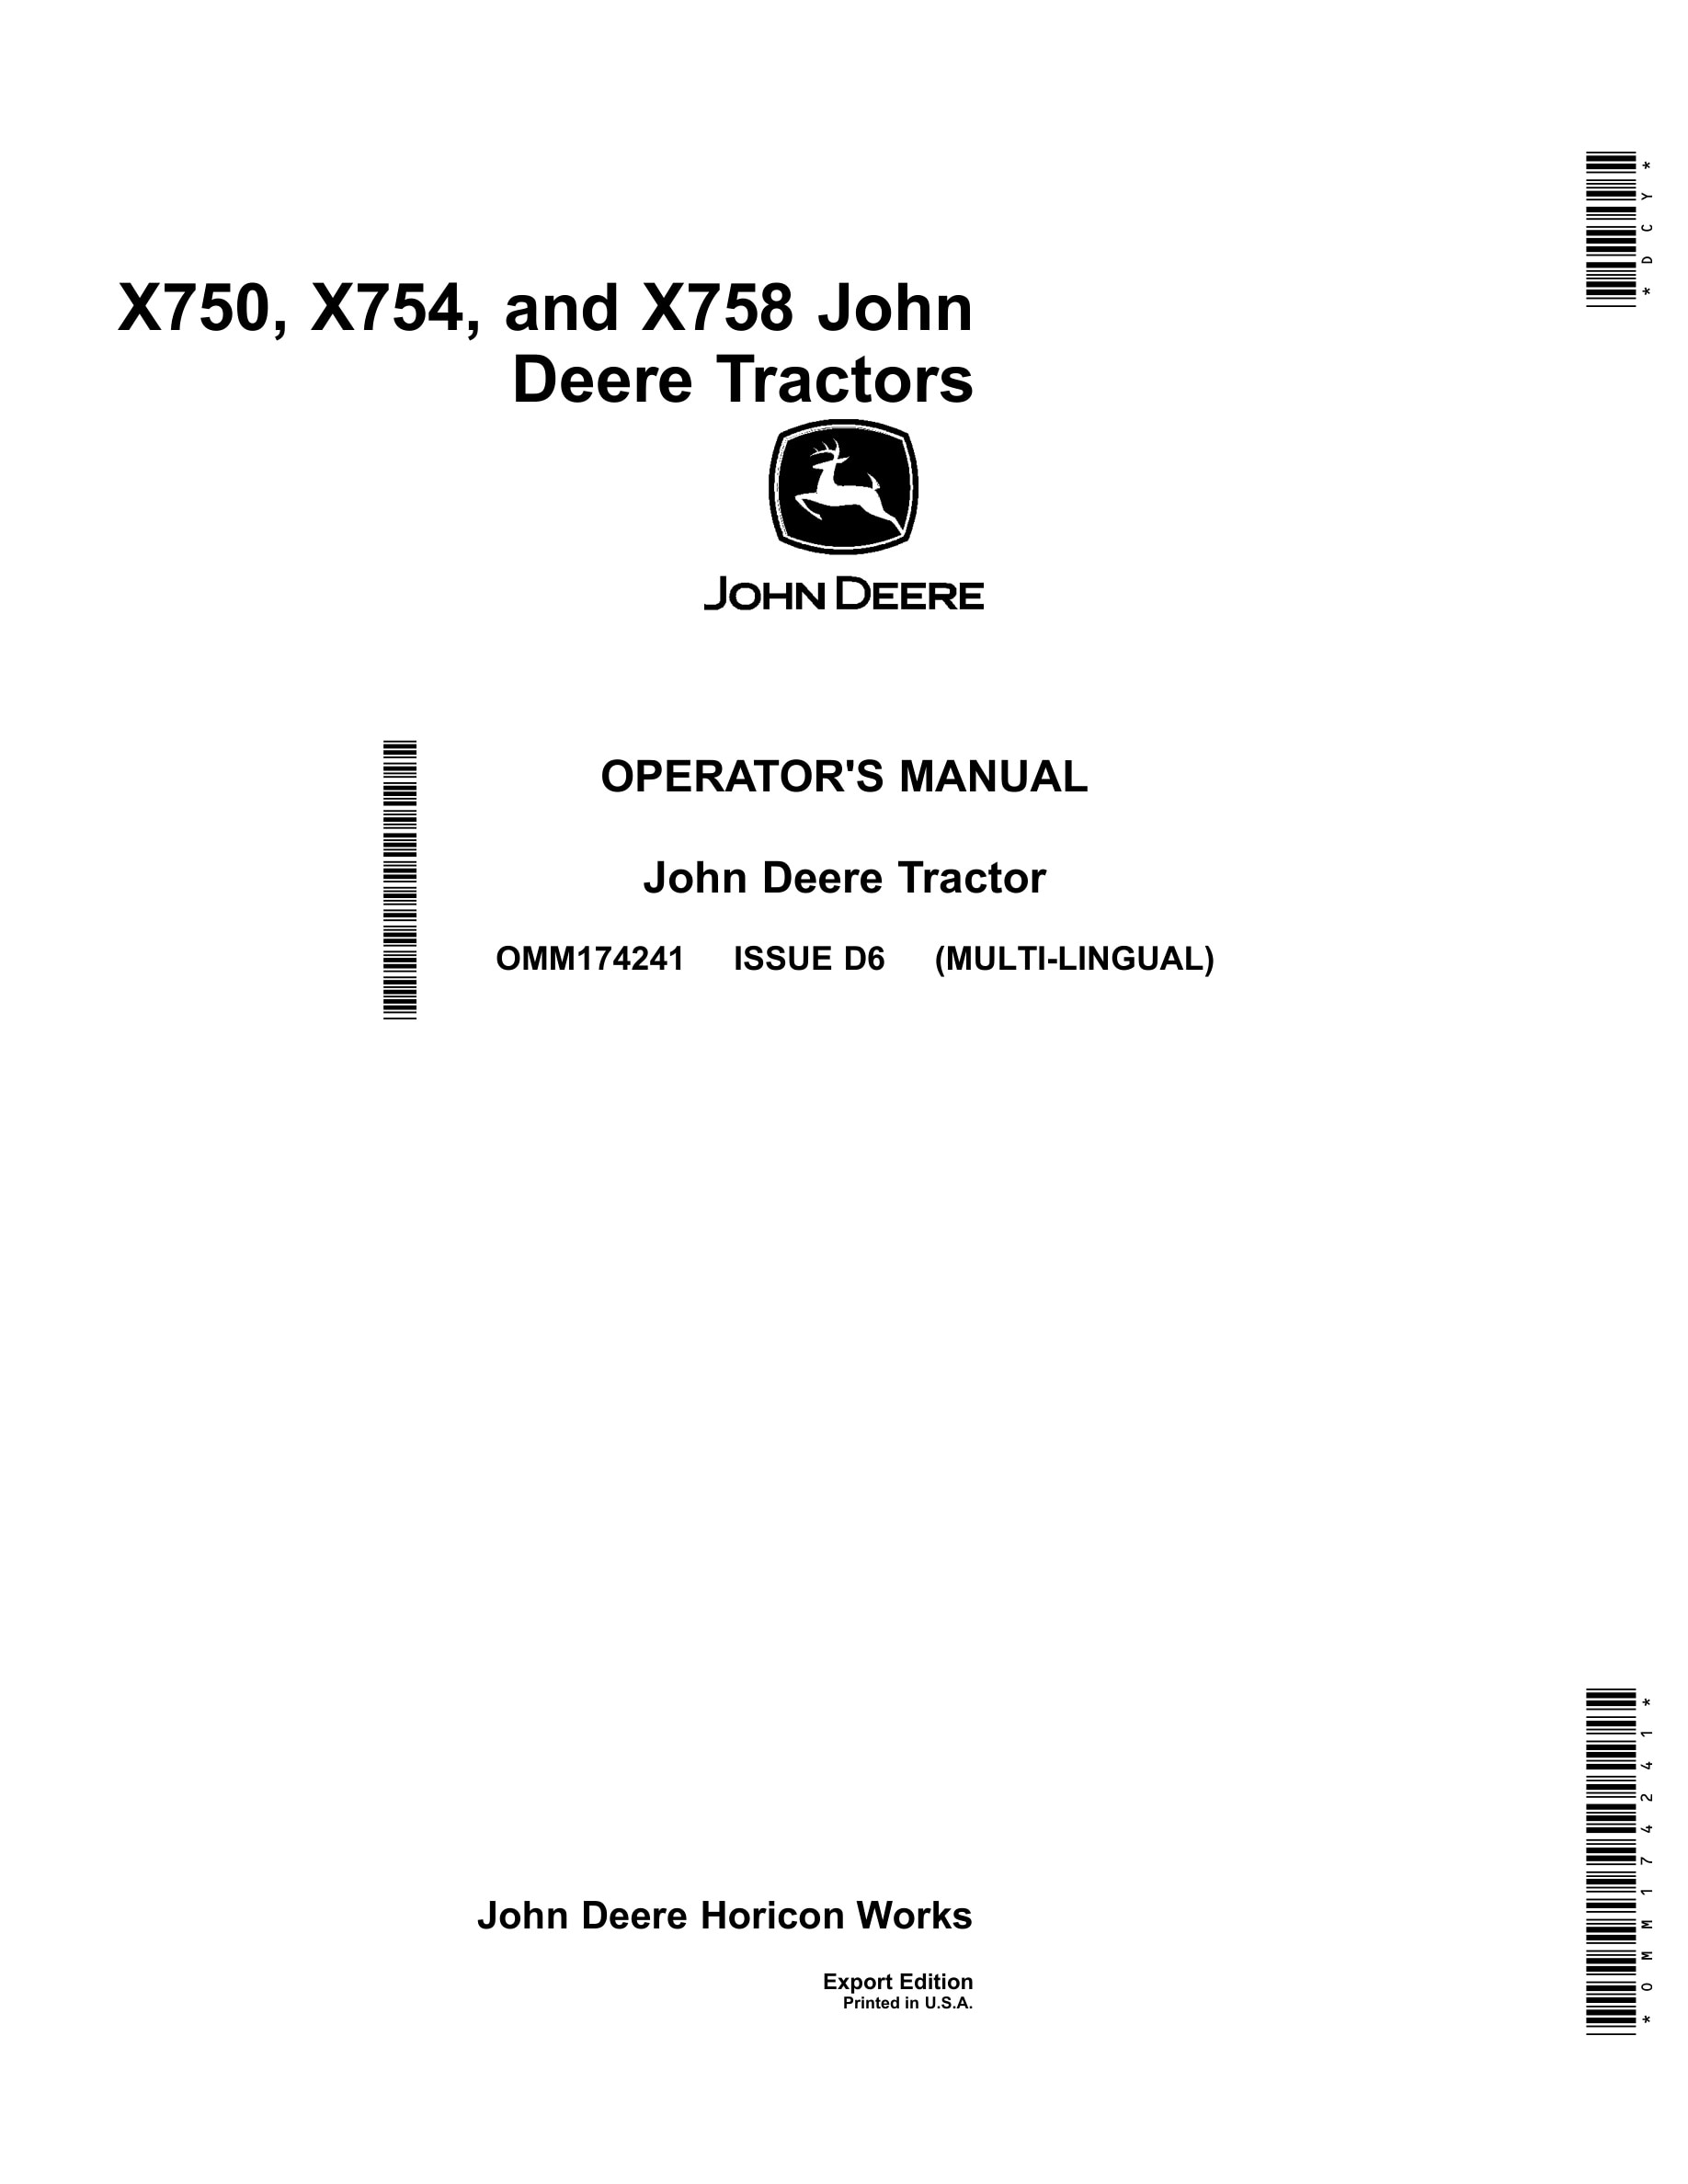 John Deere X750, X754, And X758 Heavy Duty Garden Tractors Operator Manual OMM174241-1